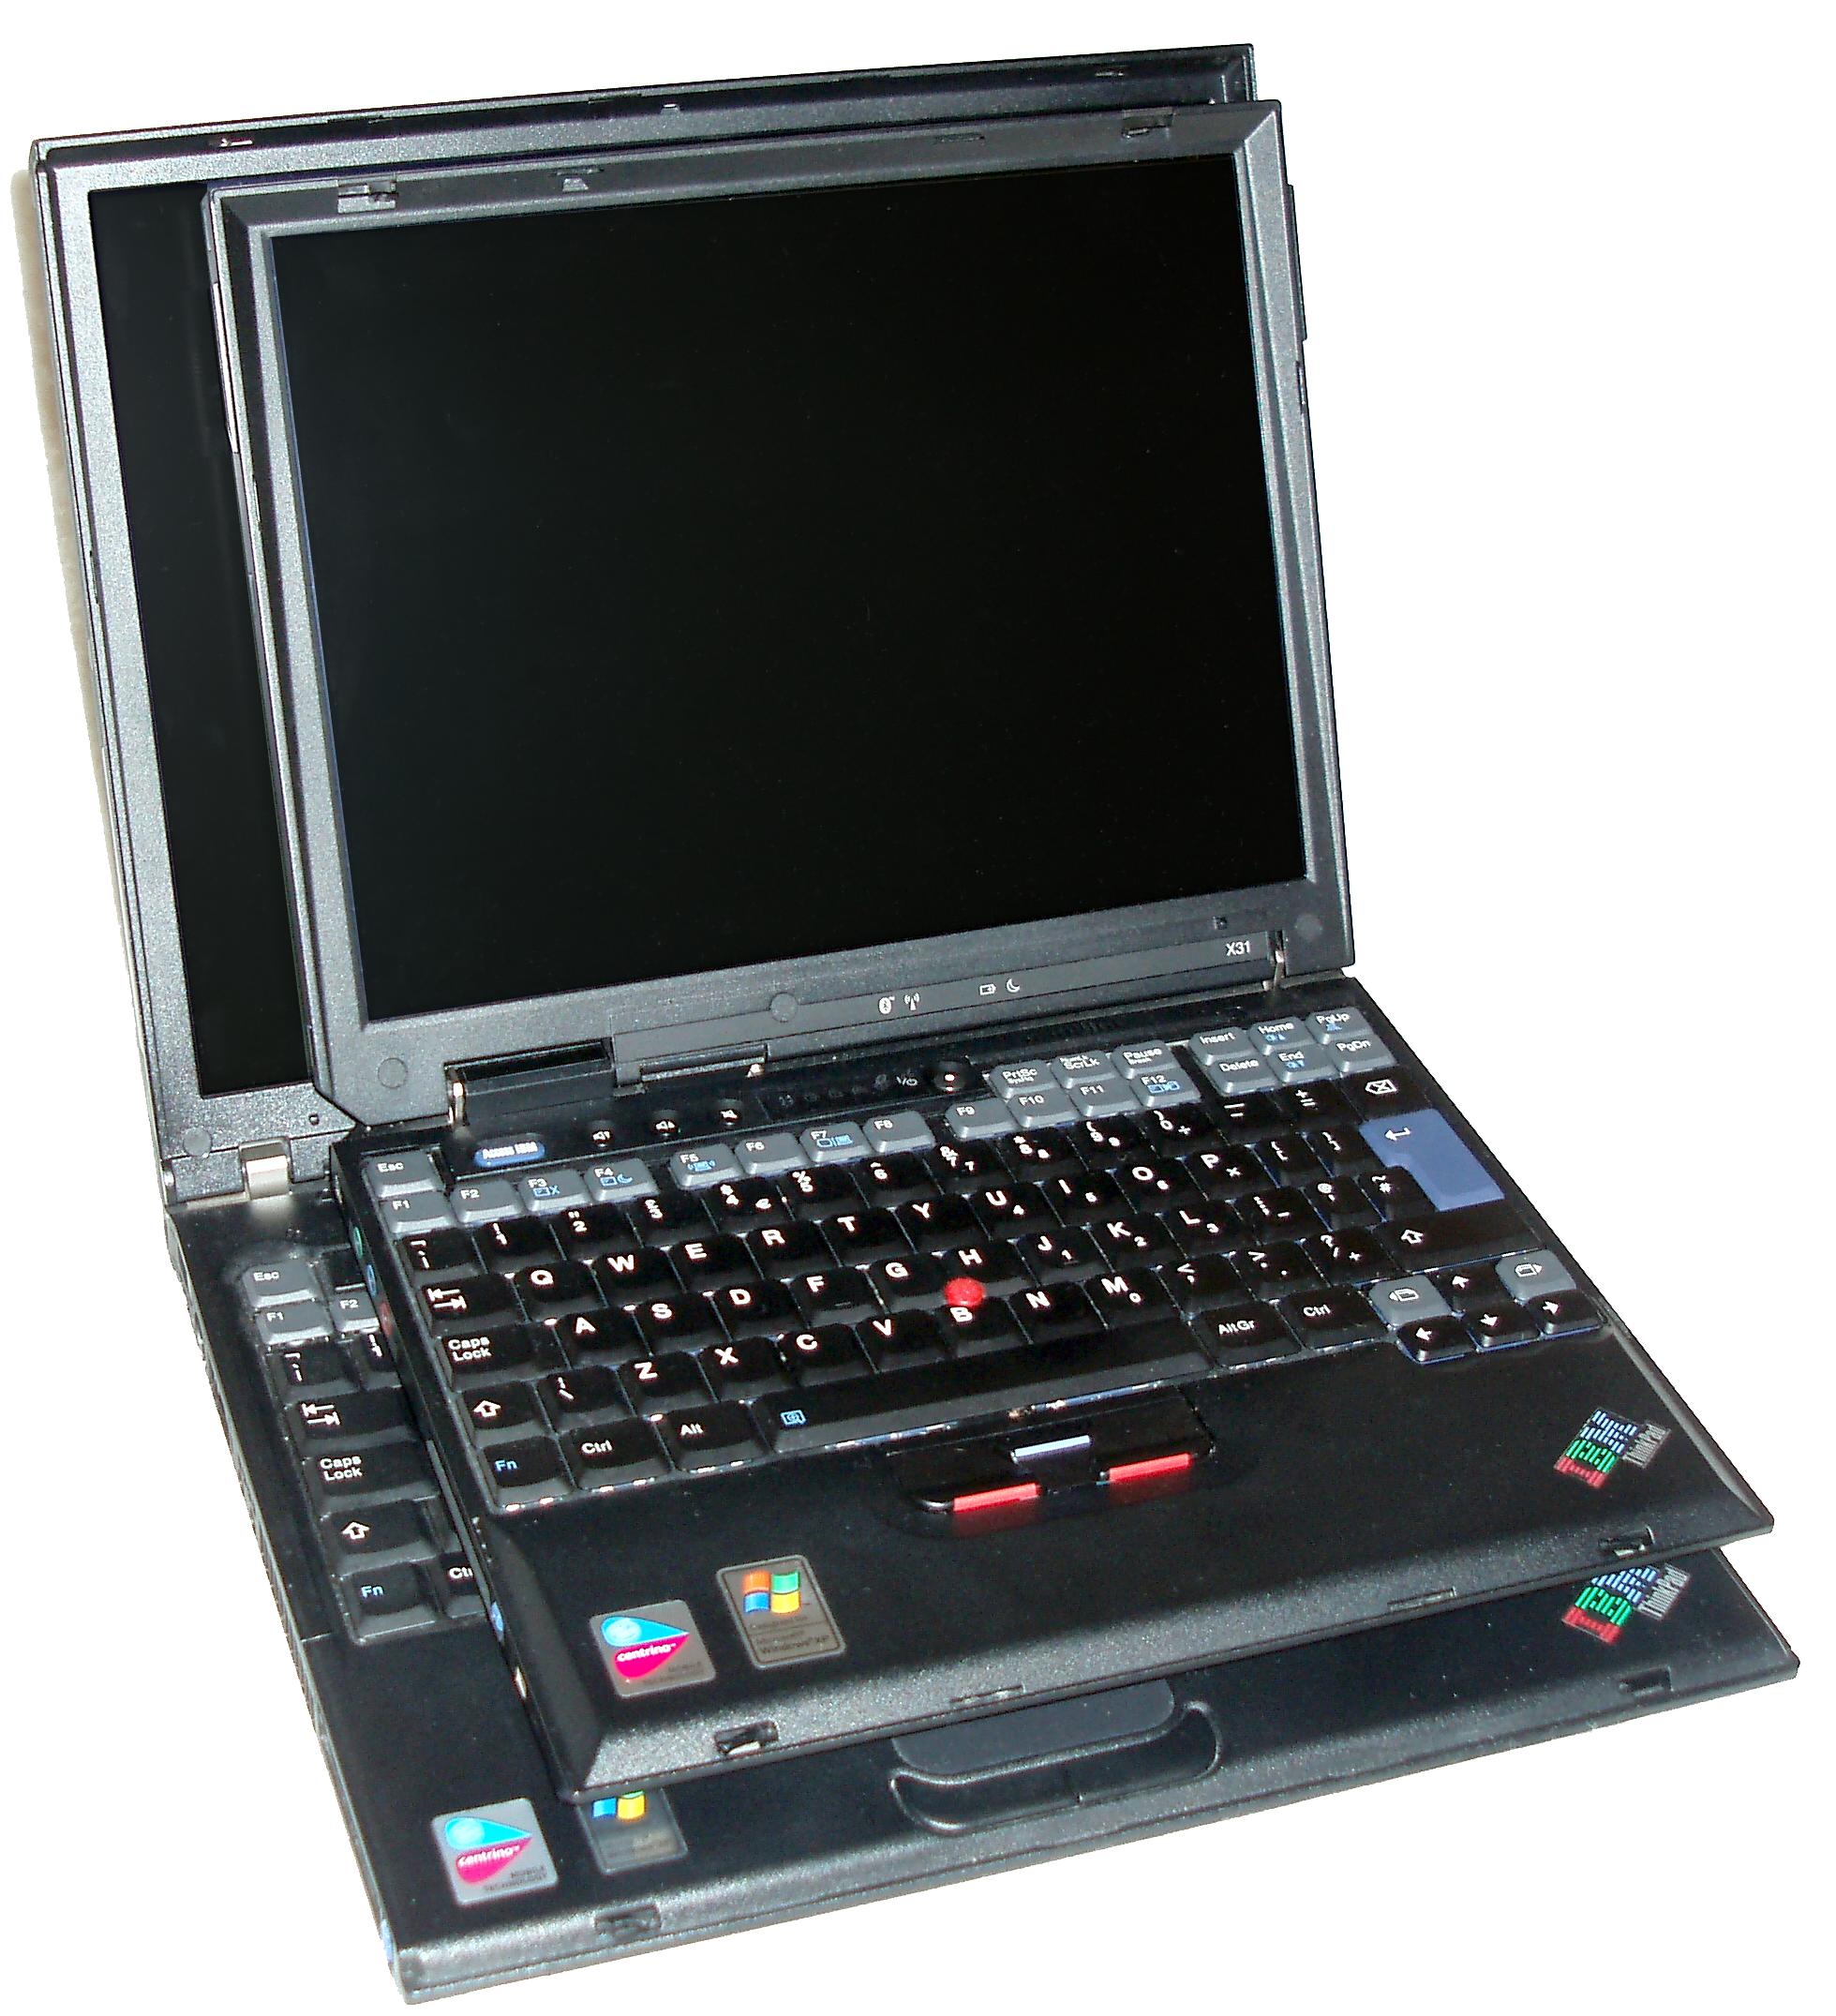 FileX31 T43 laptop.png Wikipedia